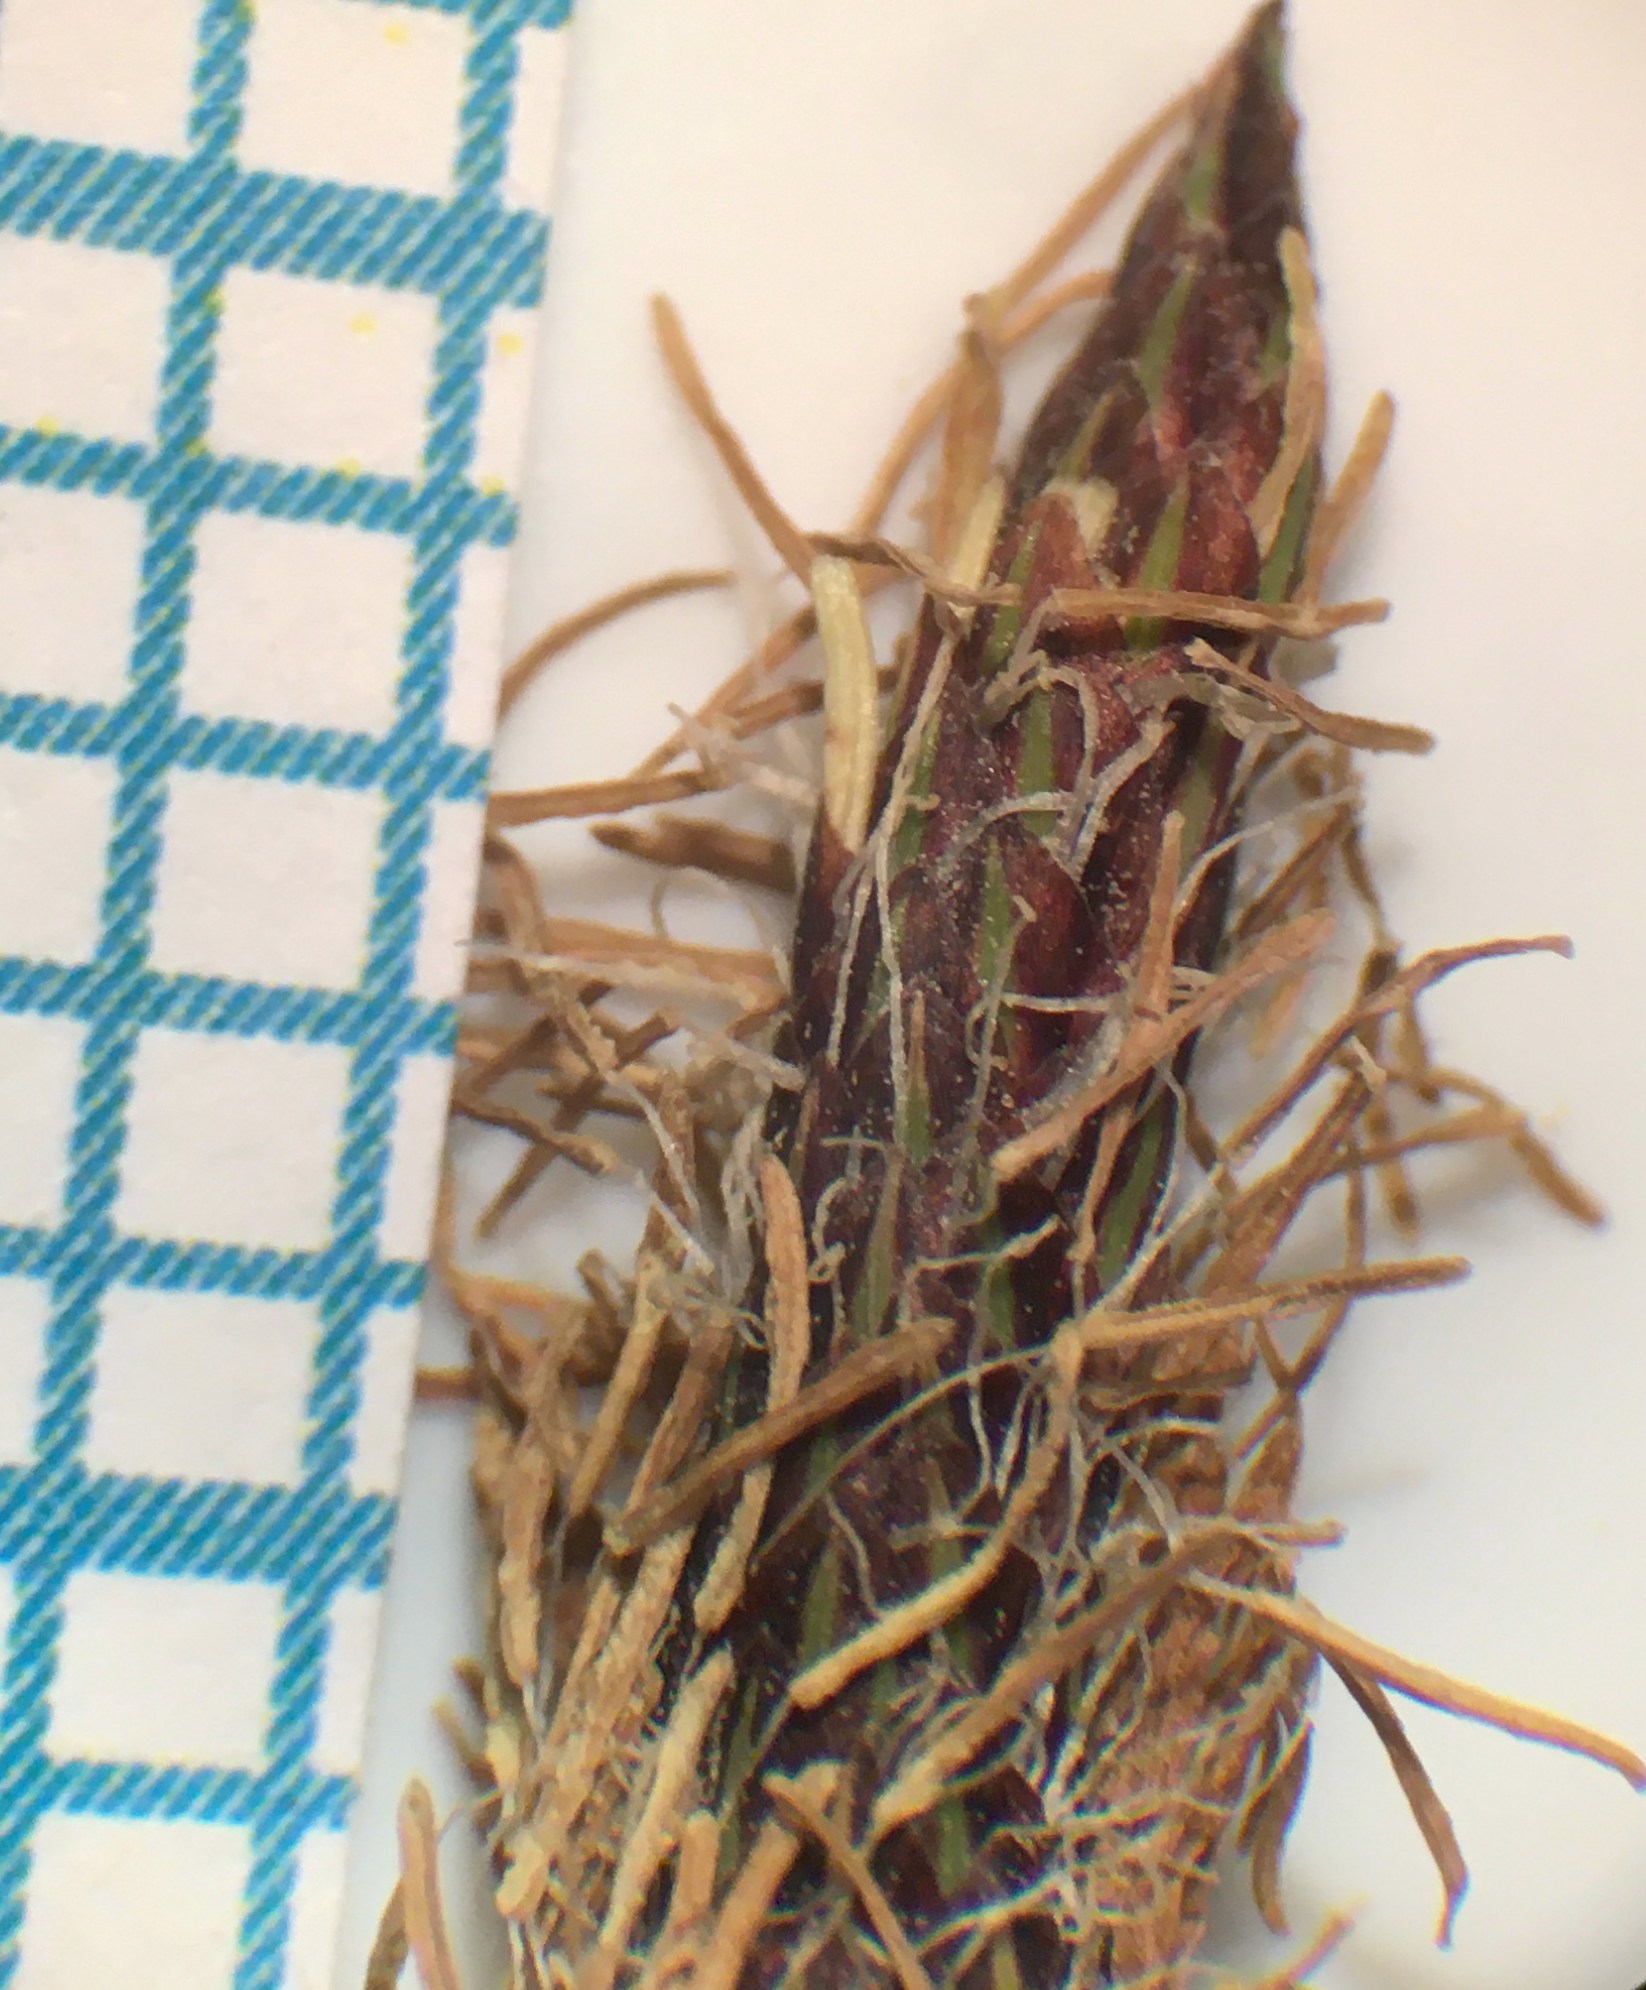 Carex obnupta male flowers under microscope.